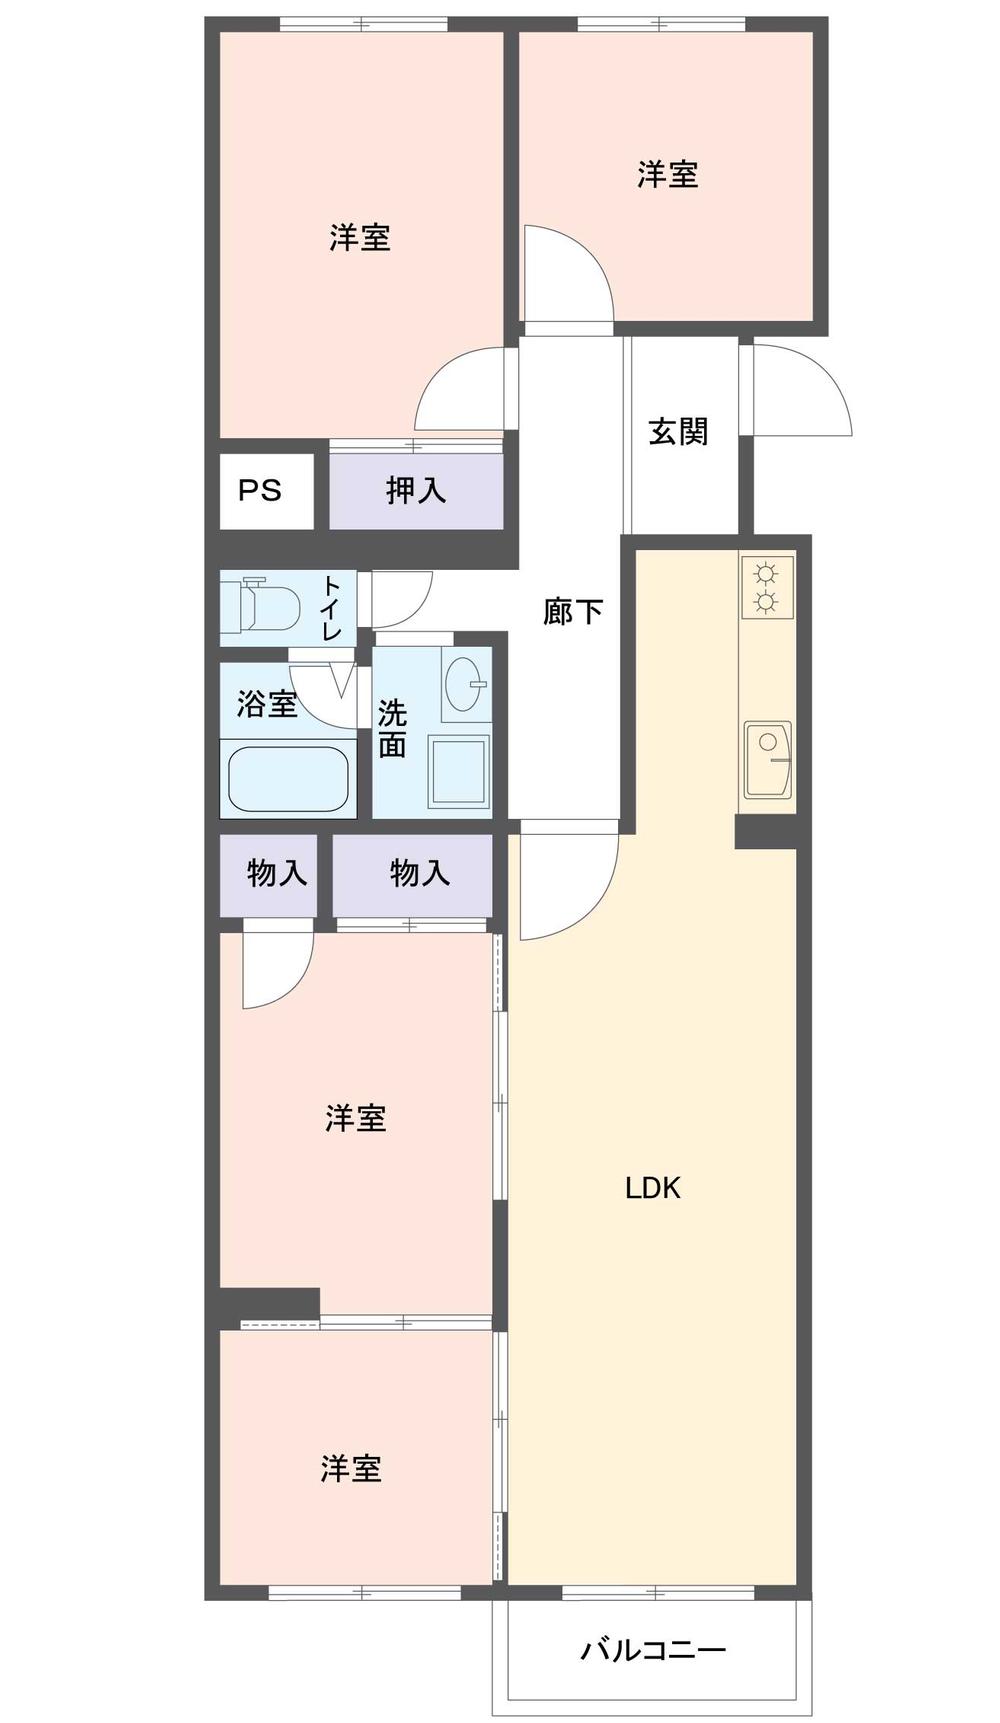 Floor plan. 4LDK, Price 11.9 million yen, Footprint 79.8 sq m , Balcony area 5.04 sq m